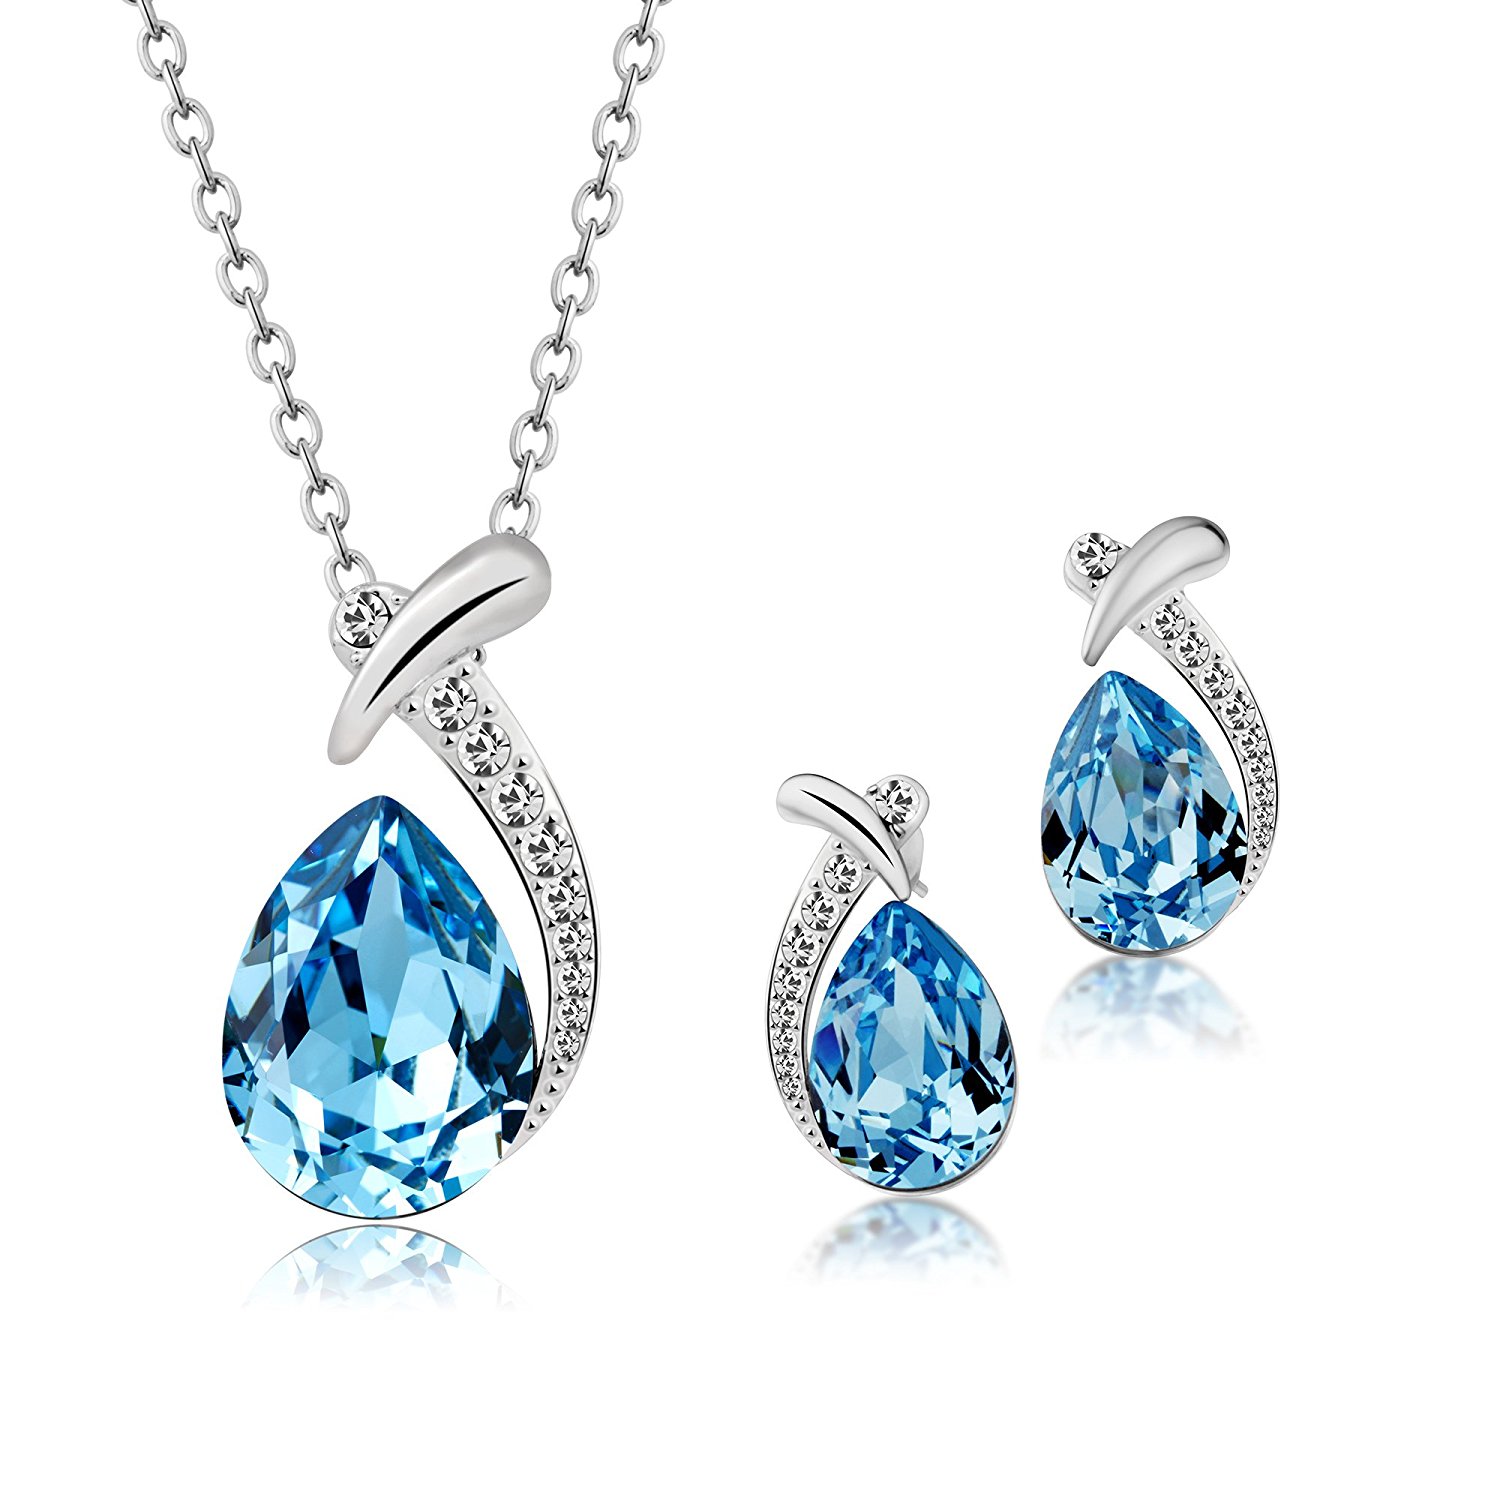 fashion jewelry sets amazon.com: t400 jewelers waterdrop pendant necklace u0026 earrings fashion  jewelry sets NXMESIJ